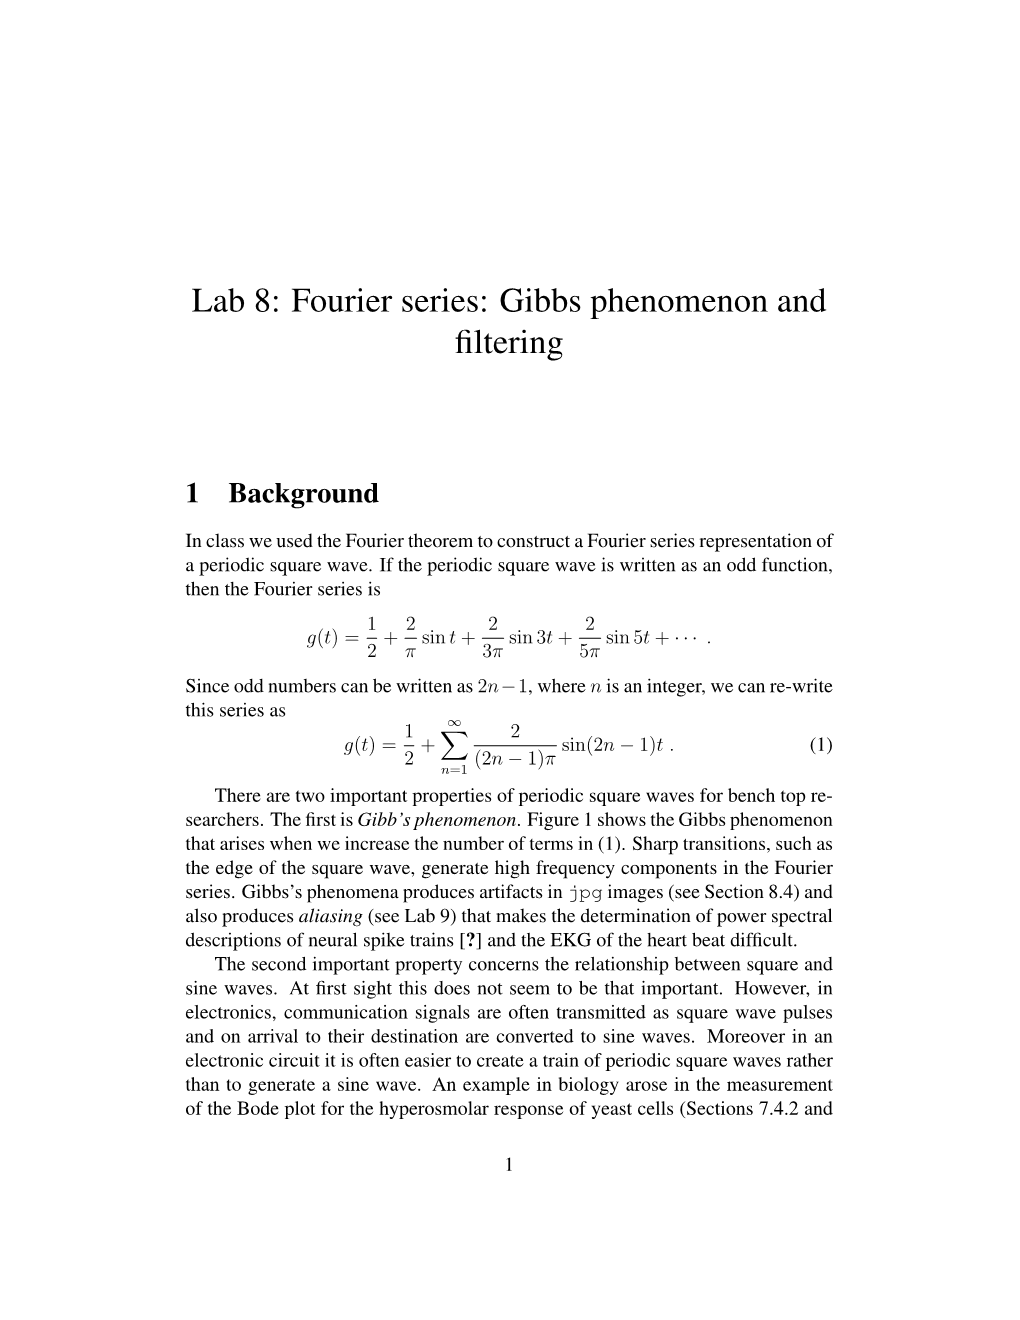 Lab 8: Fourier Series: Gibbs Phenomenon and Filtering